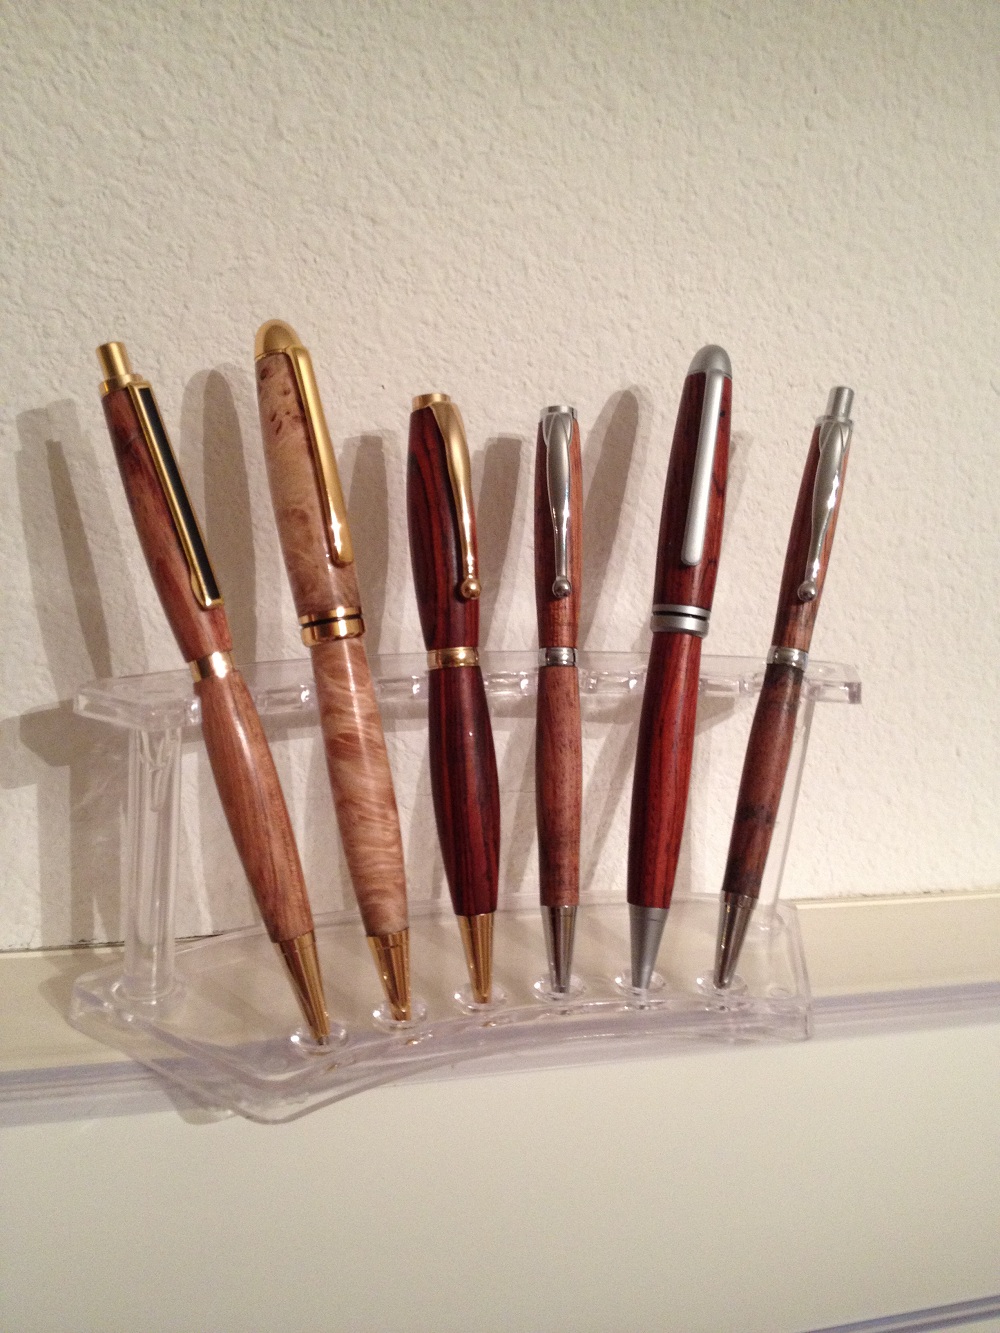 Miscellaneous Wooden Pens